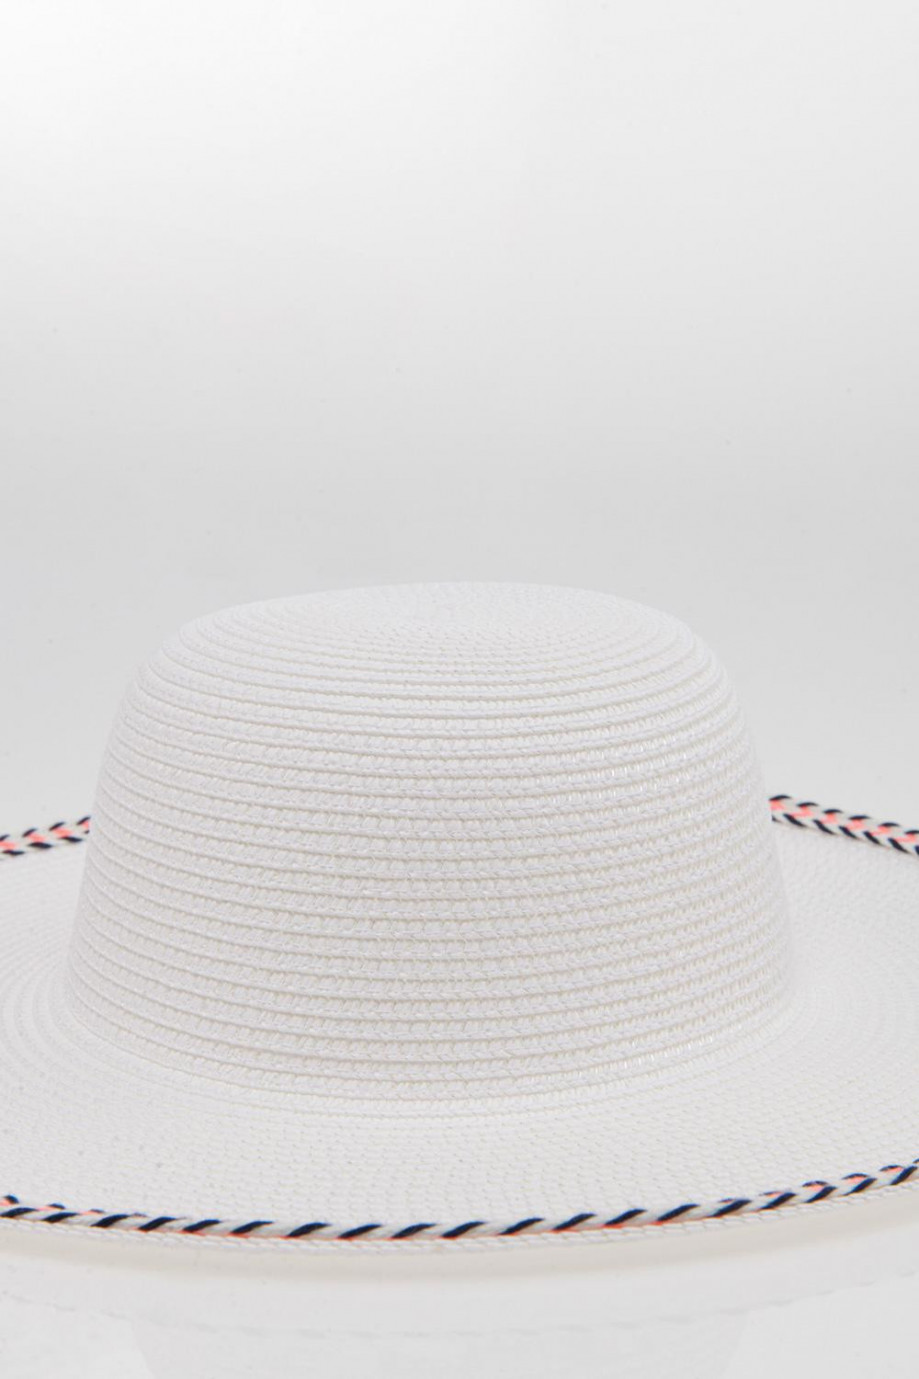 Sombrero con cinta decorativa